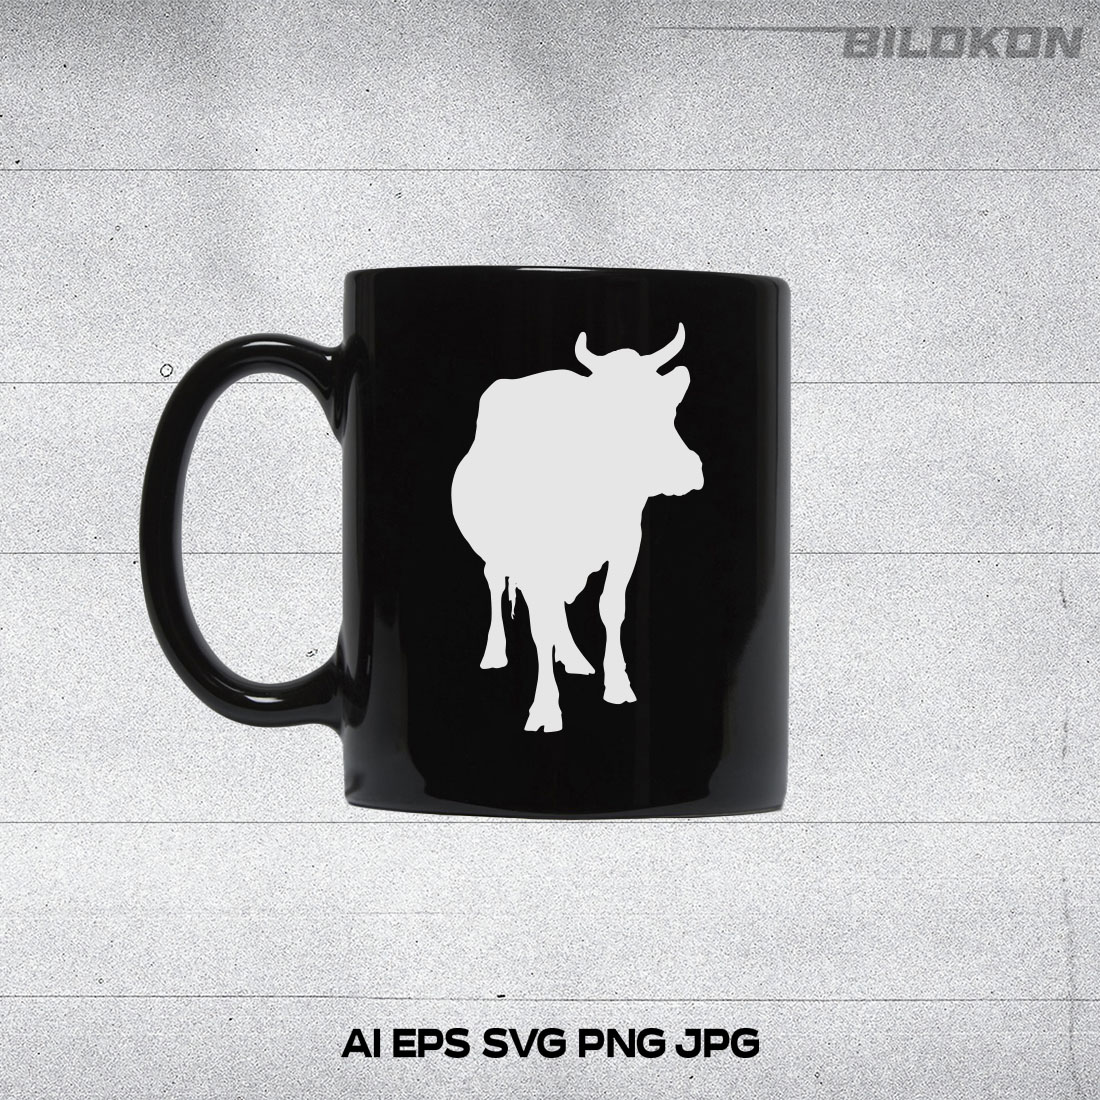 Black coffee mug with a white bull on it.